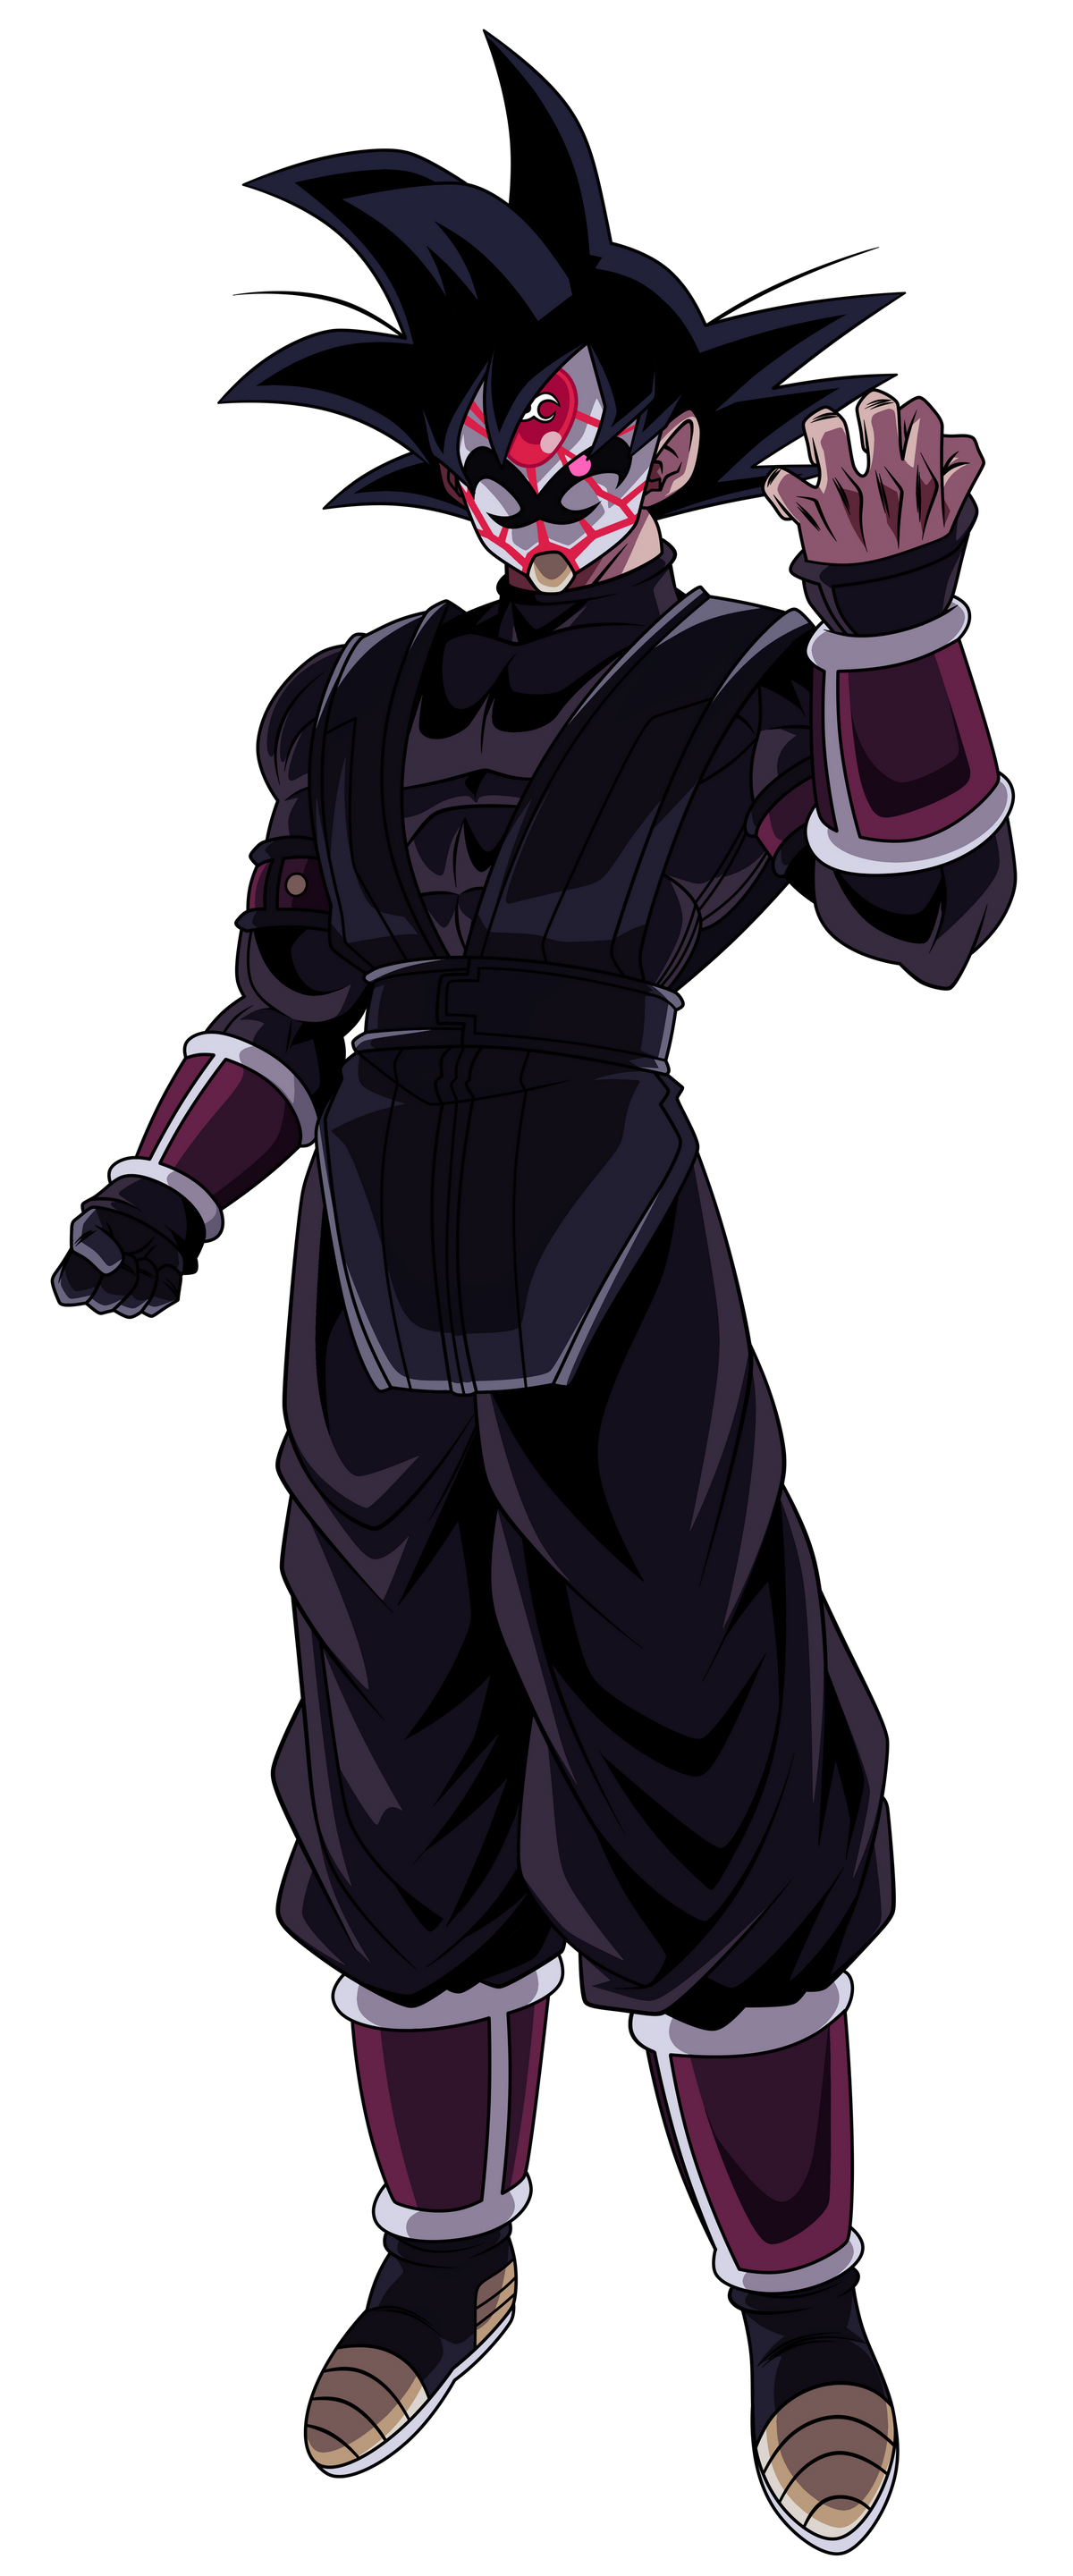 Goku Black PNG Image File